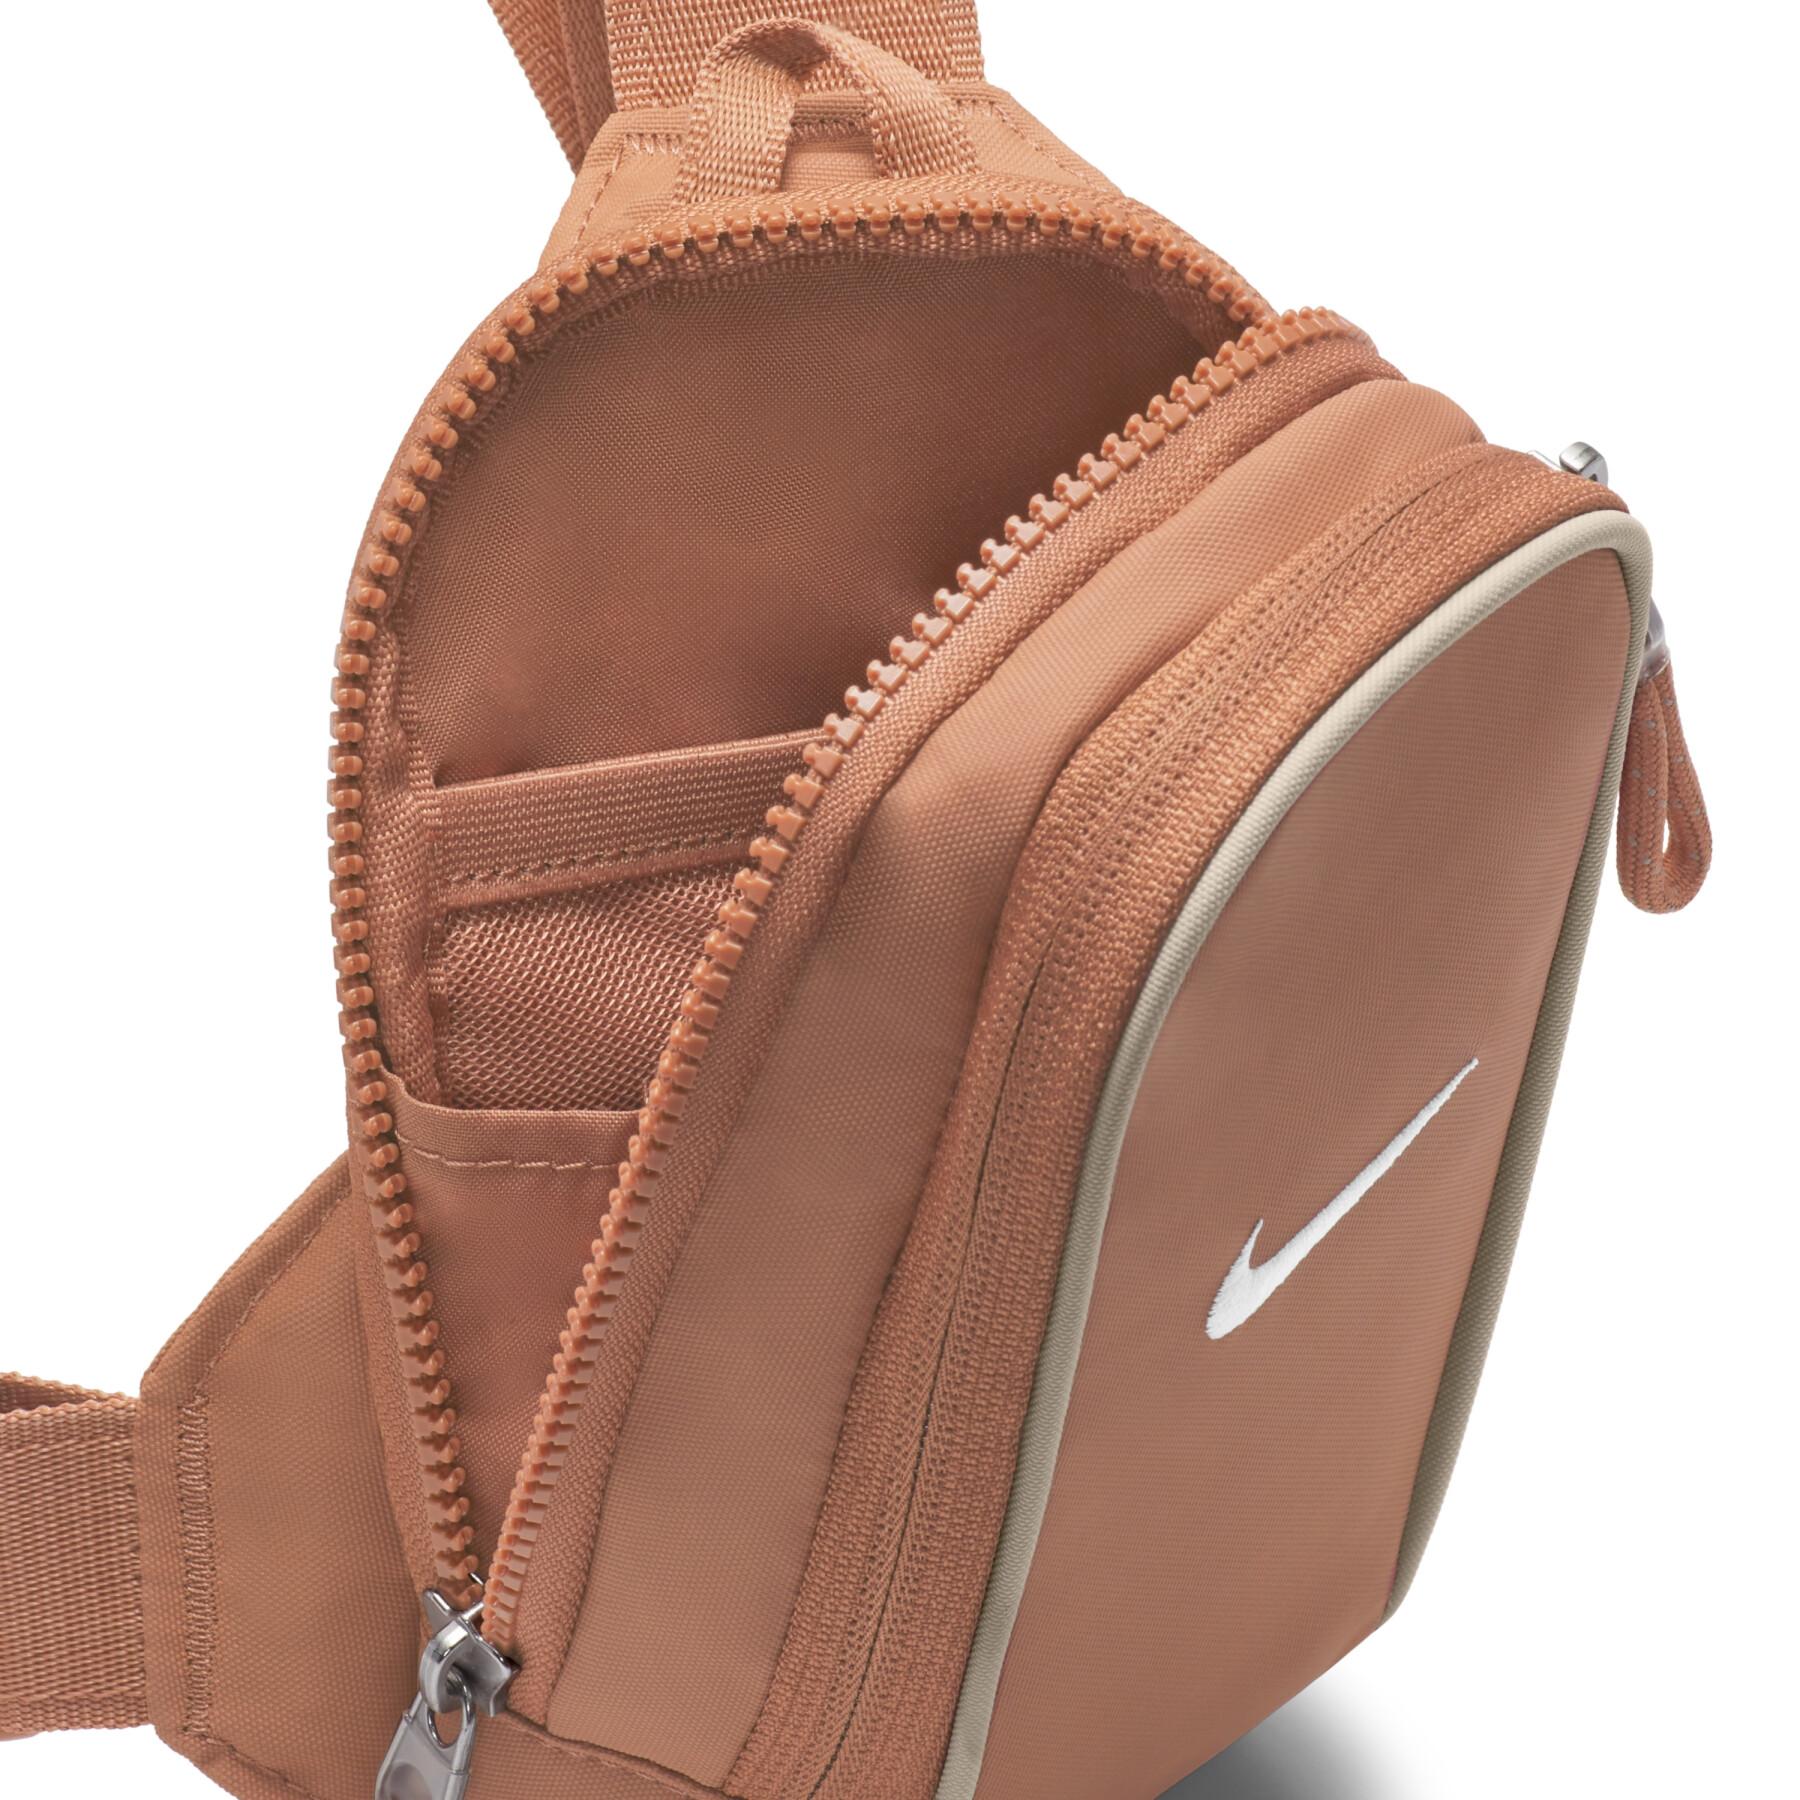 Shoulder bag Nike Sportswear Essentials